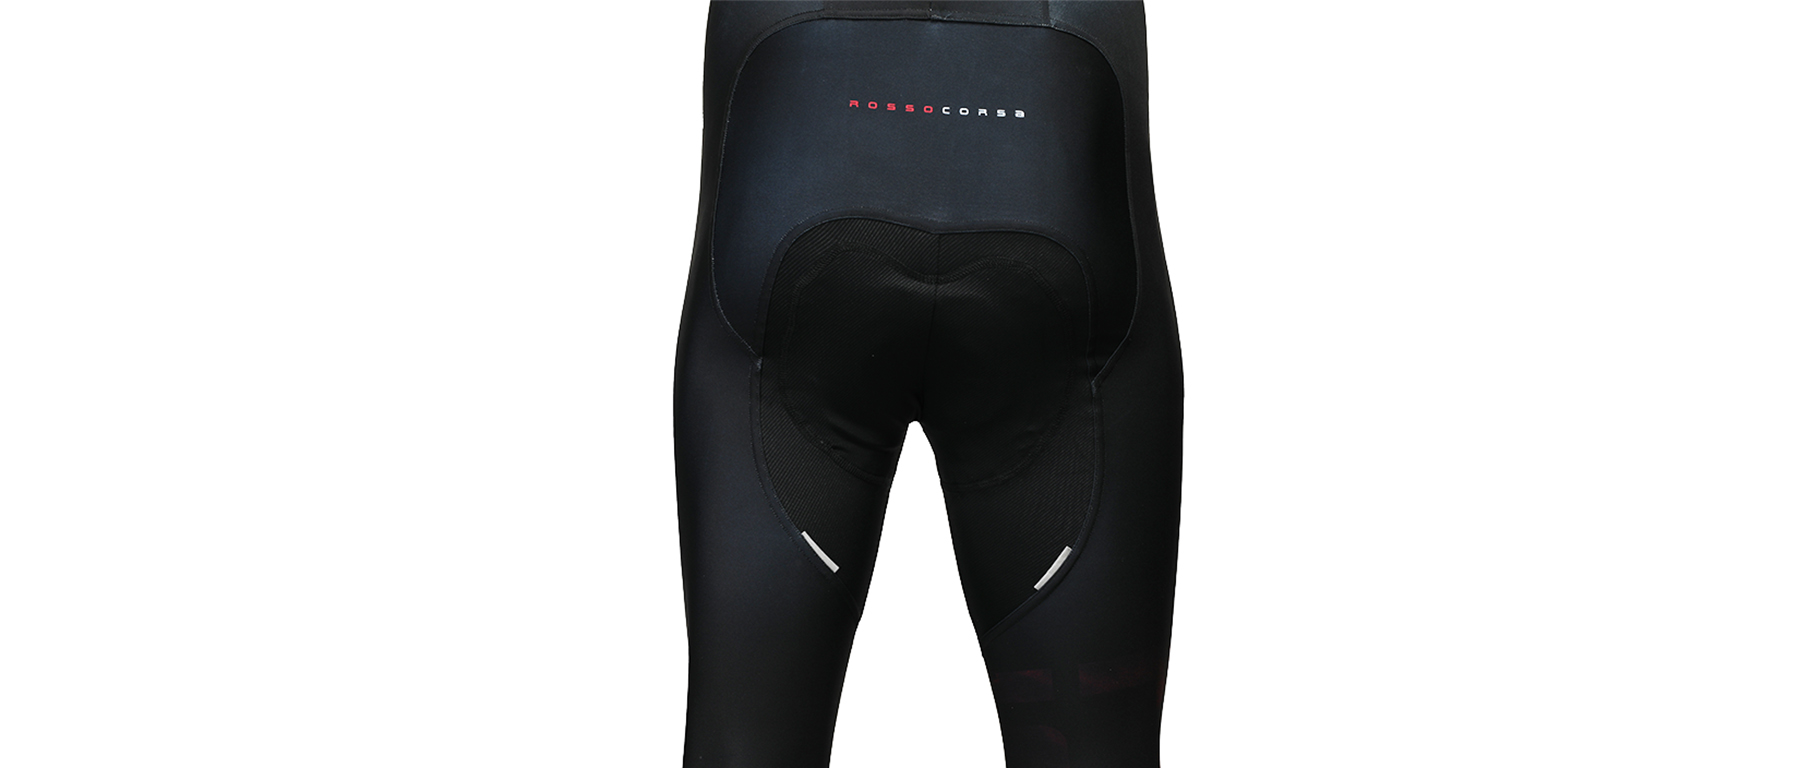 Castelli Free Aero RC Kit Bib Shorts